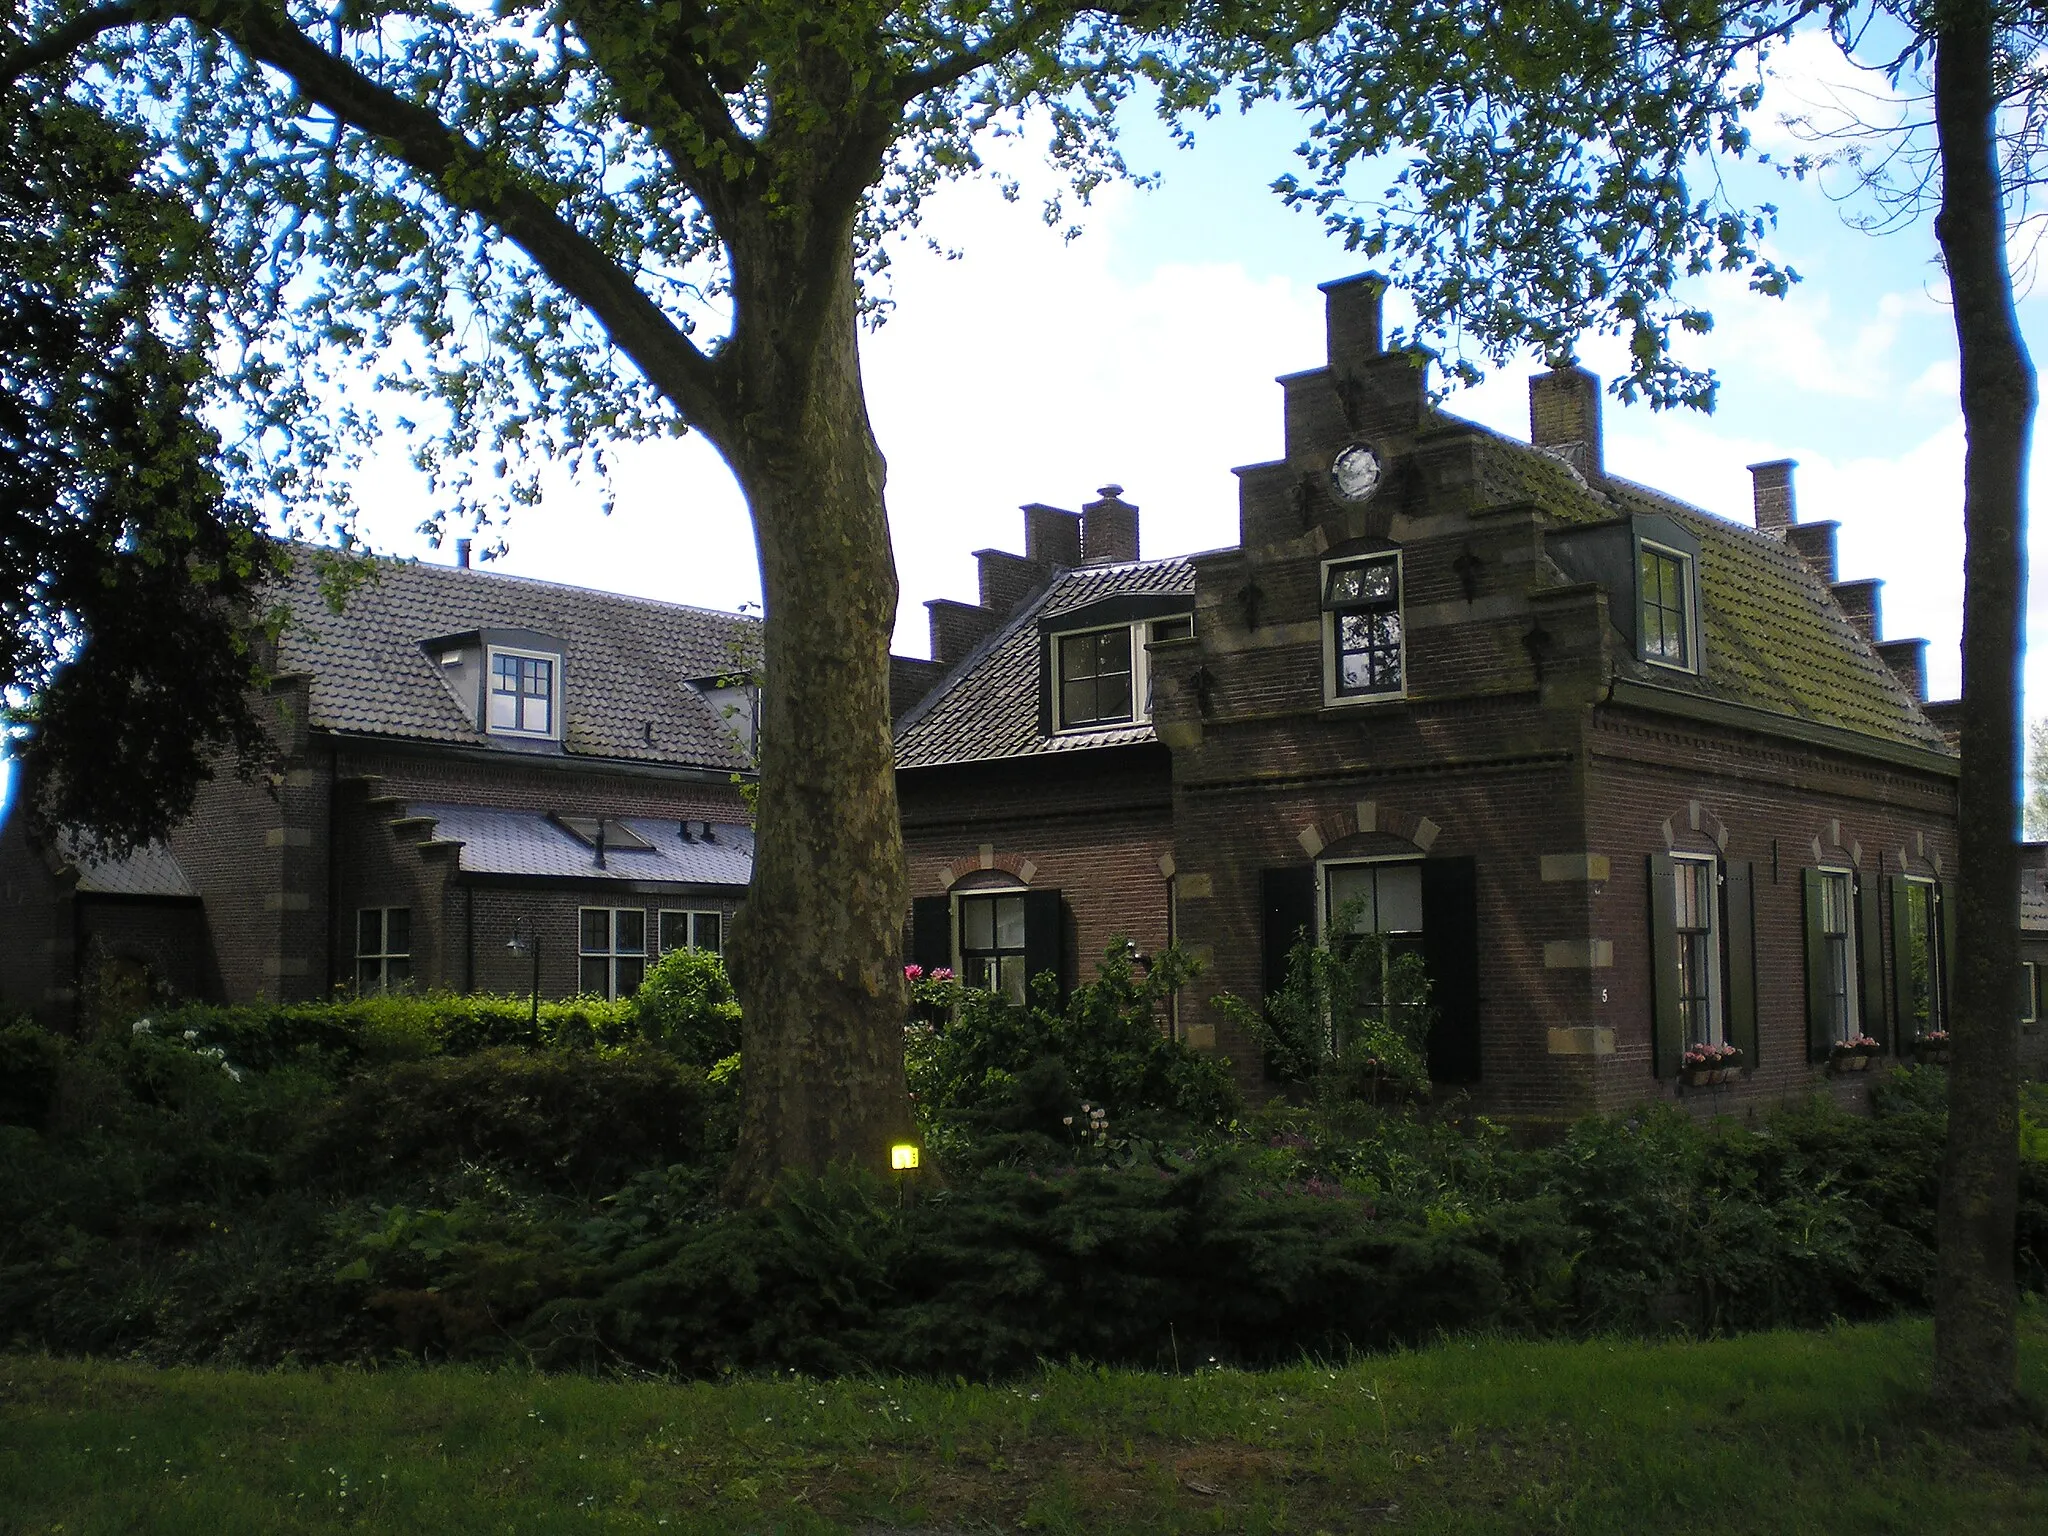 Photo showing: Michaëlschool, Waalseweg 3 in Tull en't Waal in the Netherlands